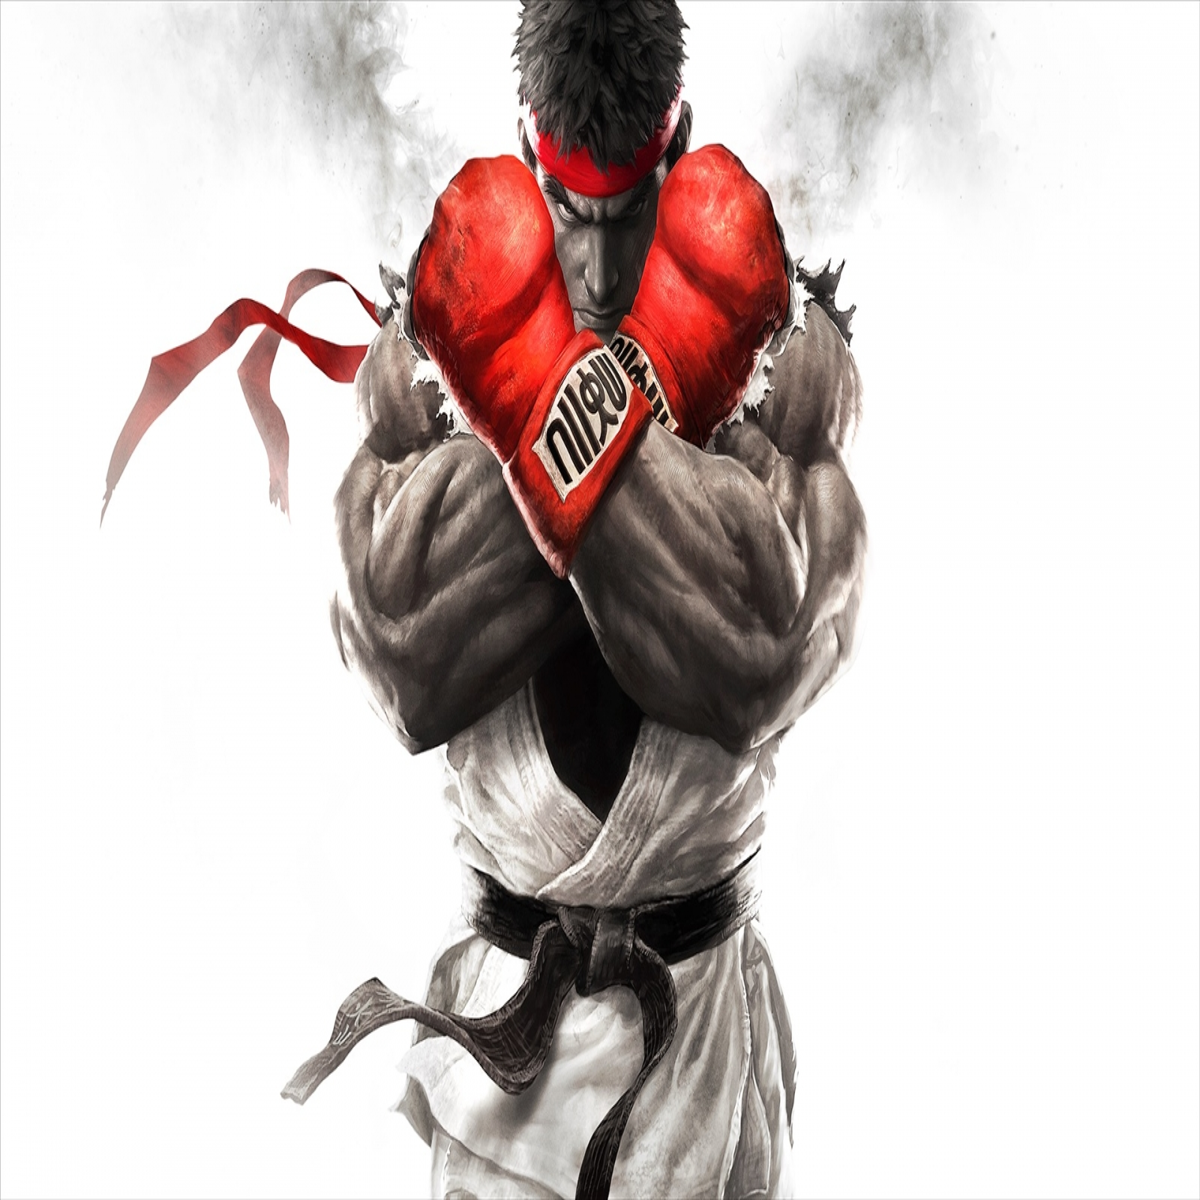 Street Fighter V – Ryu